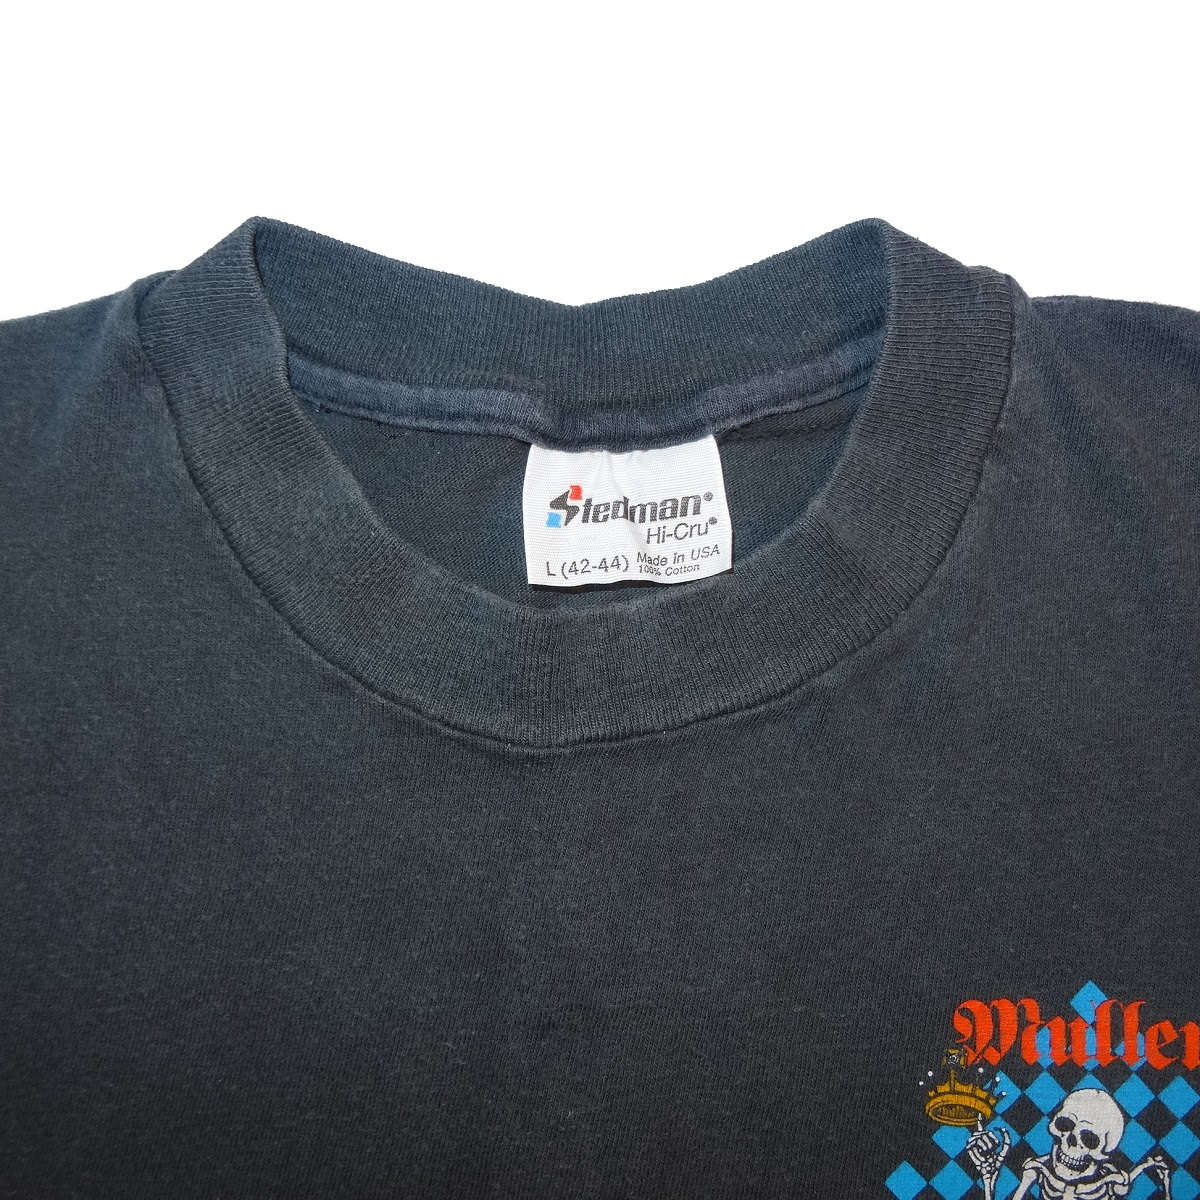 Powell Peralta Rodney Mullen T-Shirt Vintage 80s - Tarks Tees